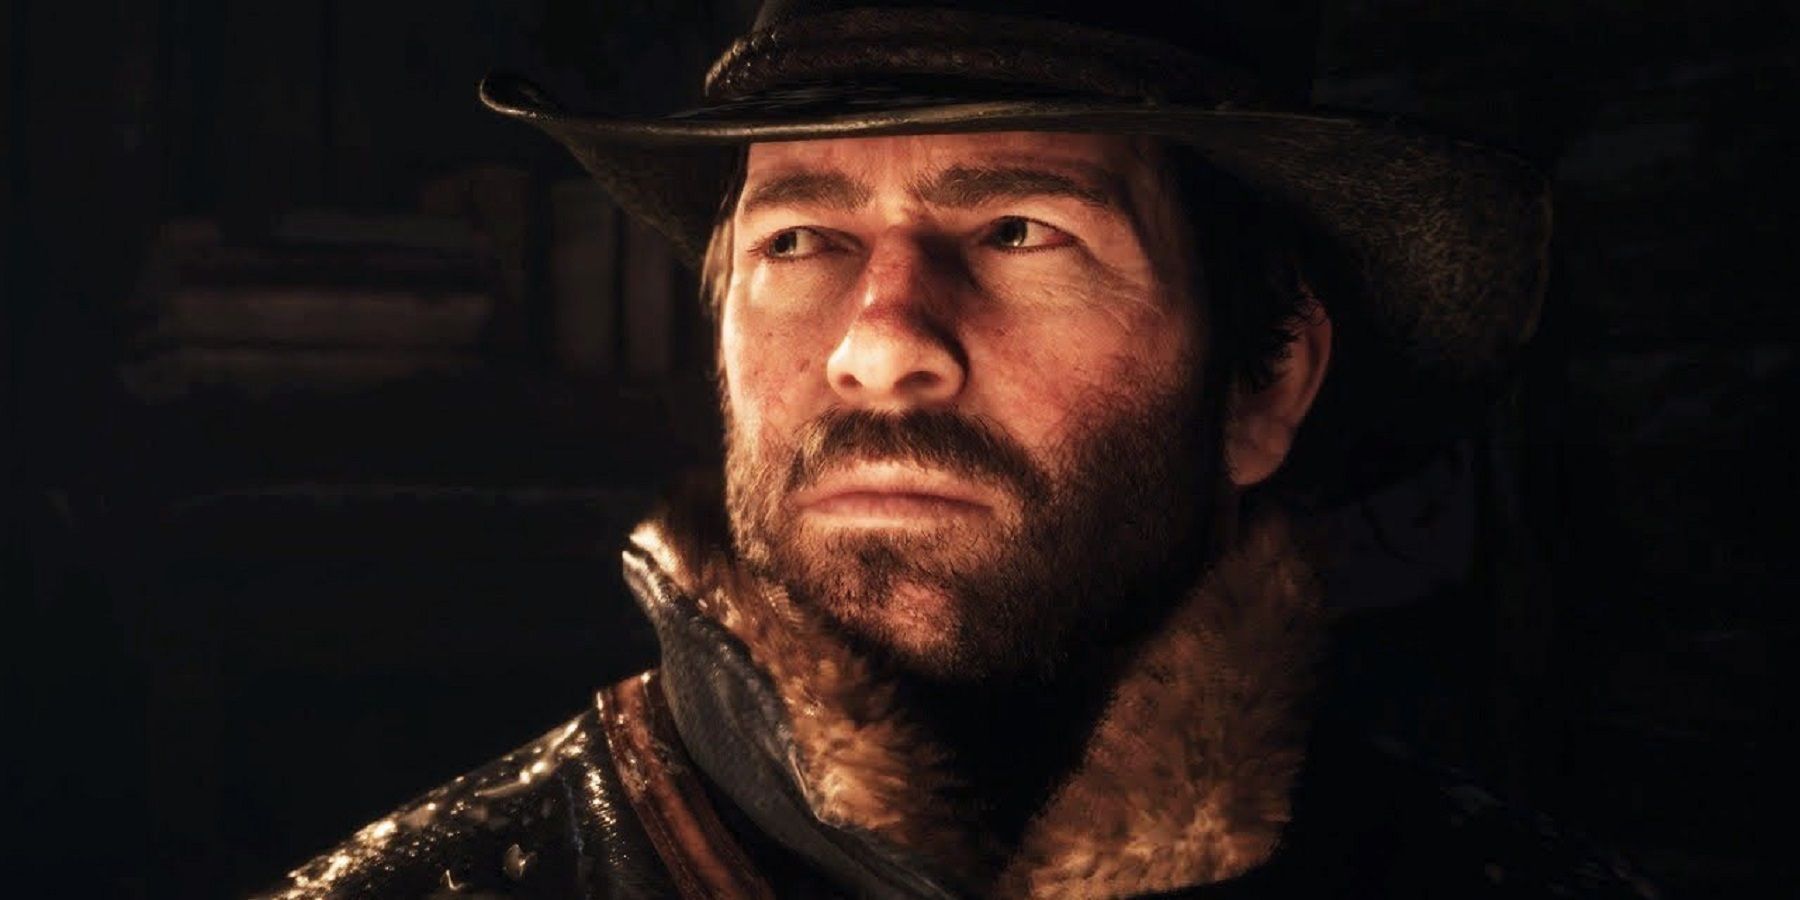 Red Dead Redemption 2-ის ფანი იყენებს AI-ს არტურის რეალისტური ფოტოს შესაქმნელად